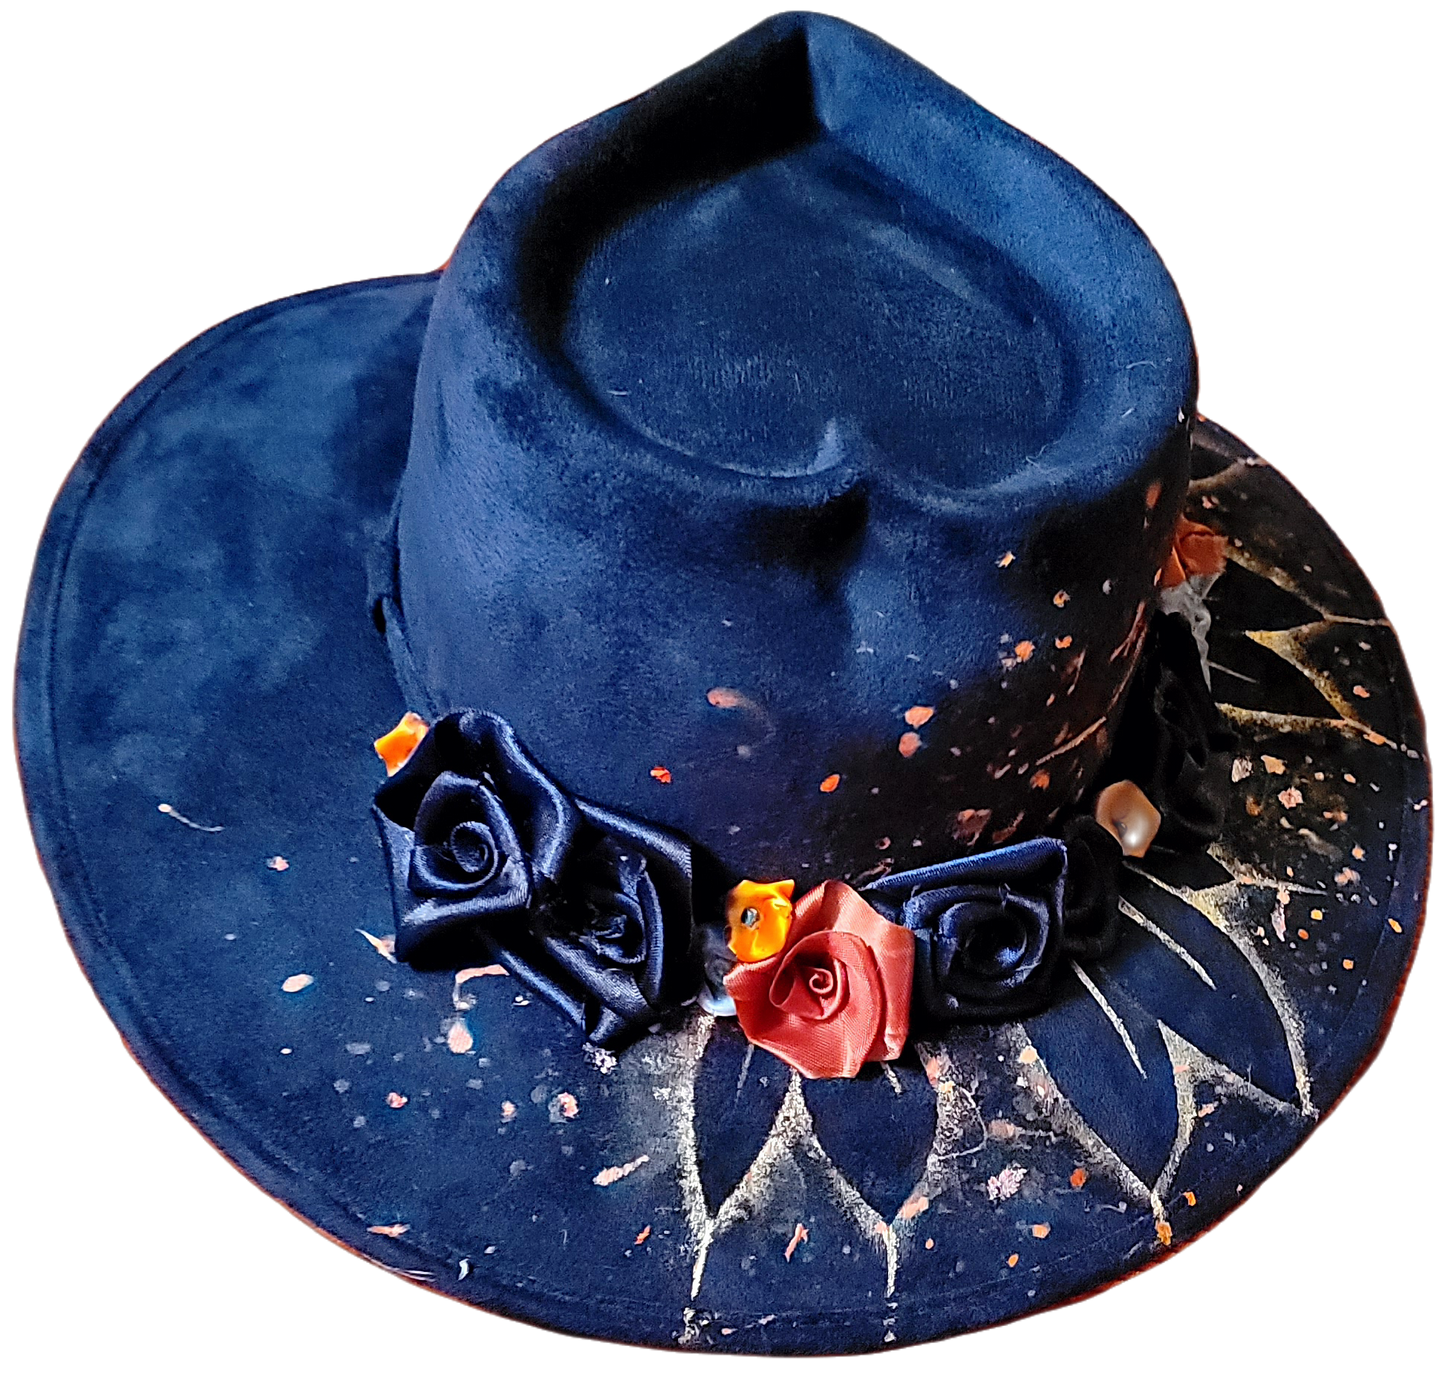 Hat - Hand painted Blue Felt Heart Top